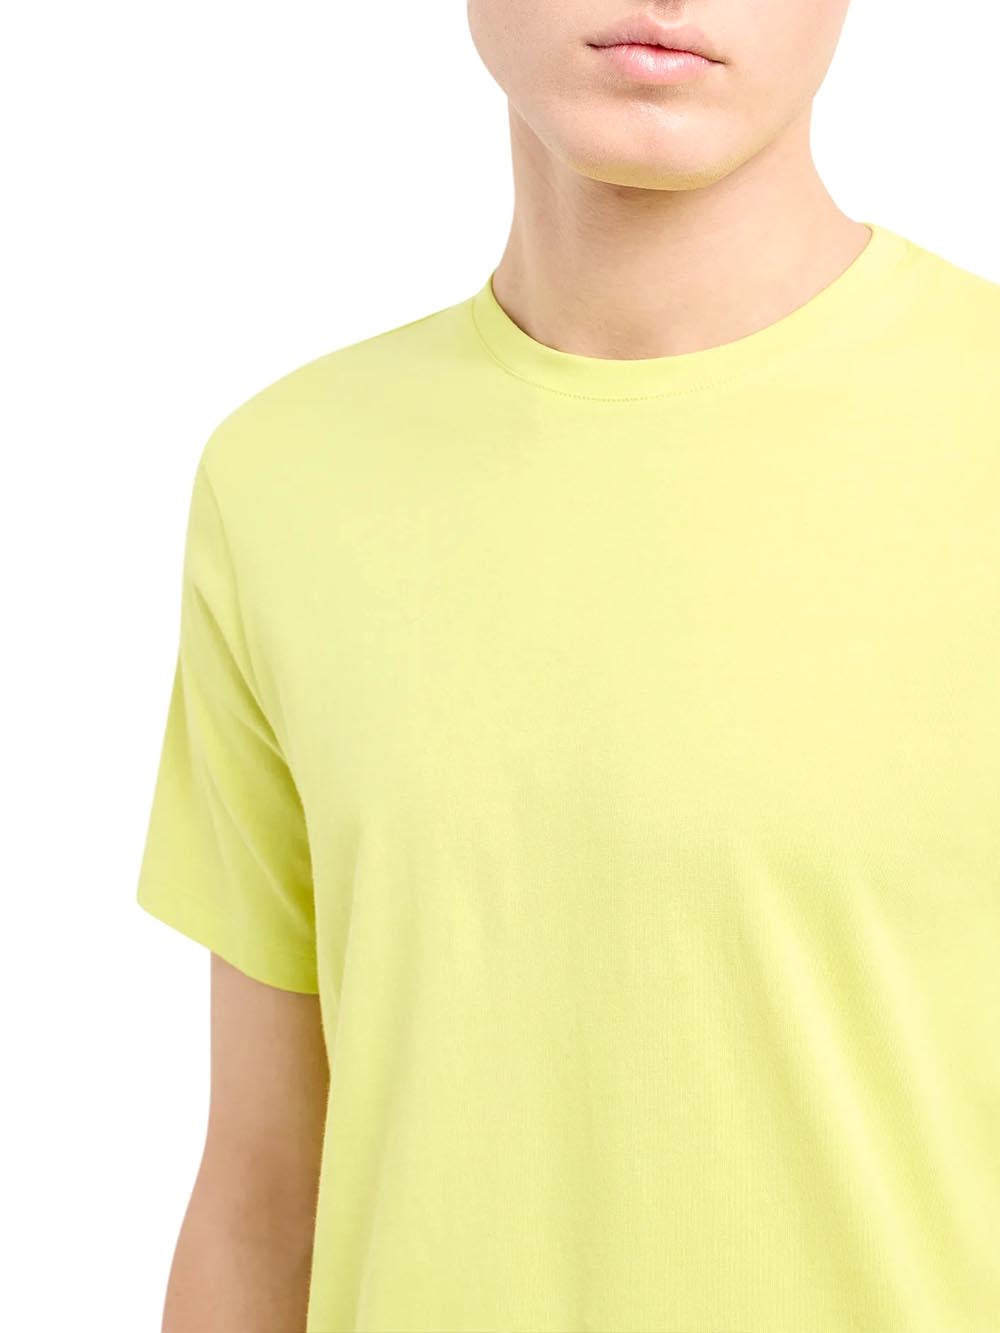 Armani Exchange T-shirt Uomo 3dztjj Zj8ez Verde acido